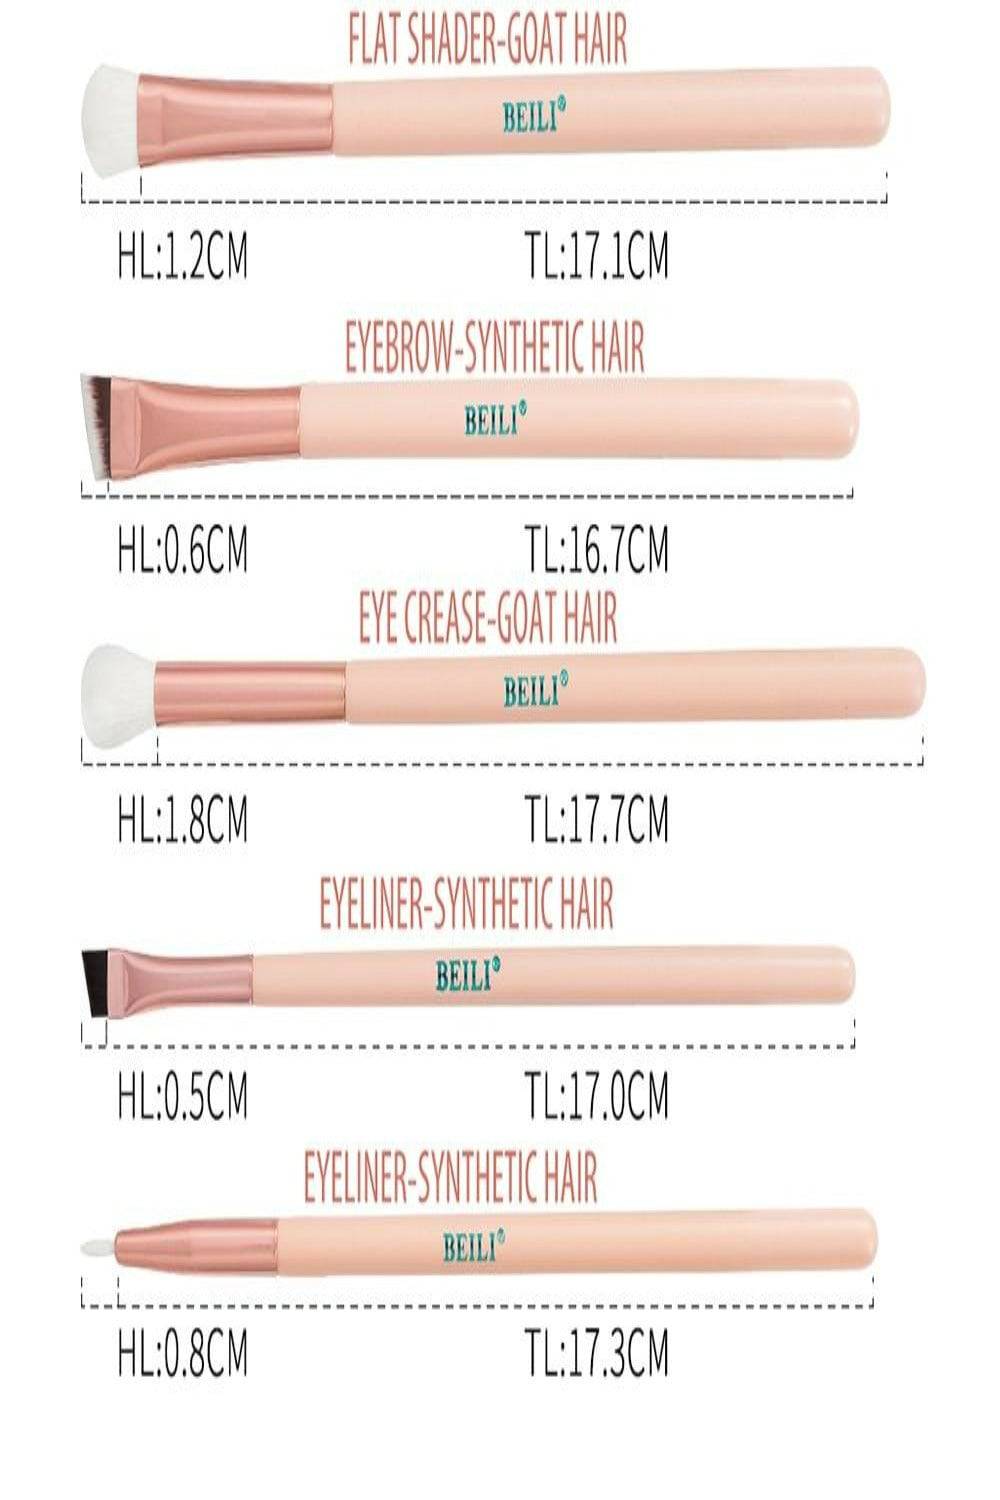 Pink Rose Gold Blending Makeup brush Set - 15 Pack - TGC Boutique - Makeup Brush Set